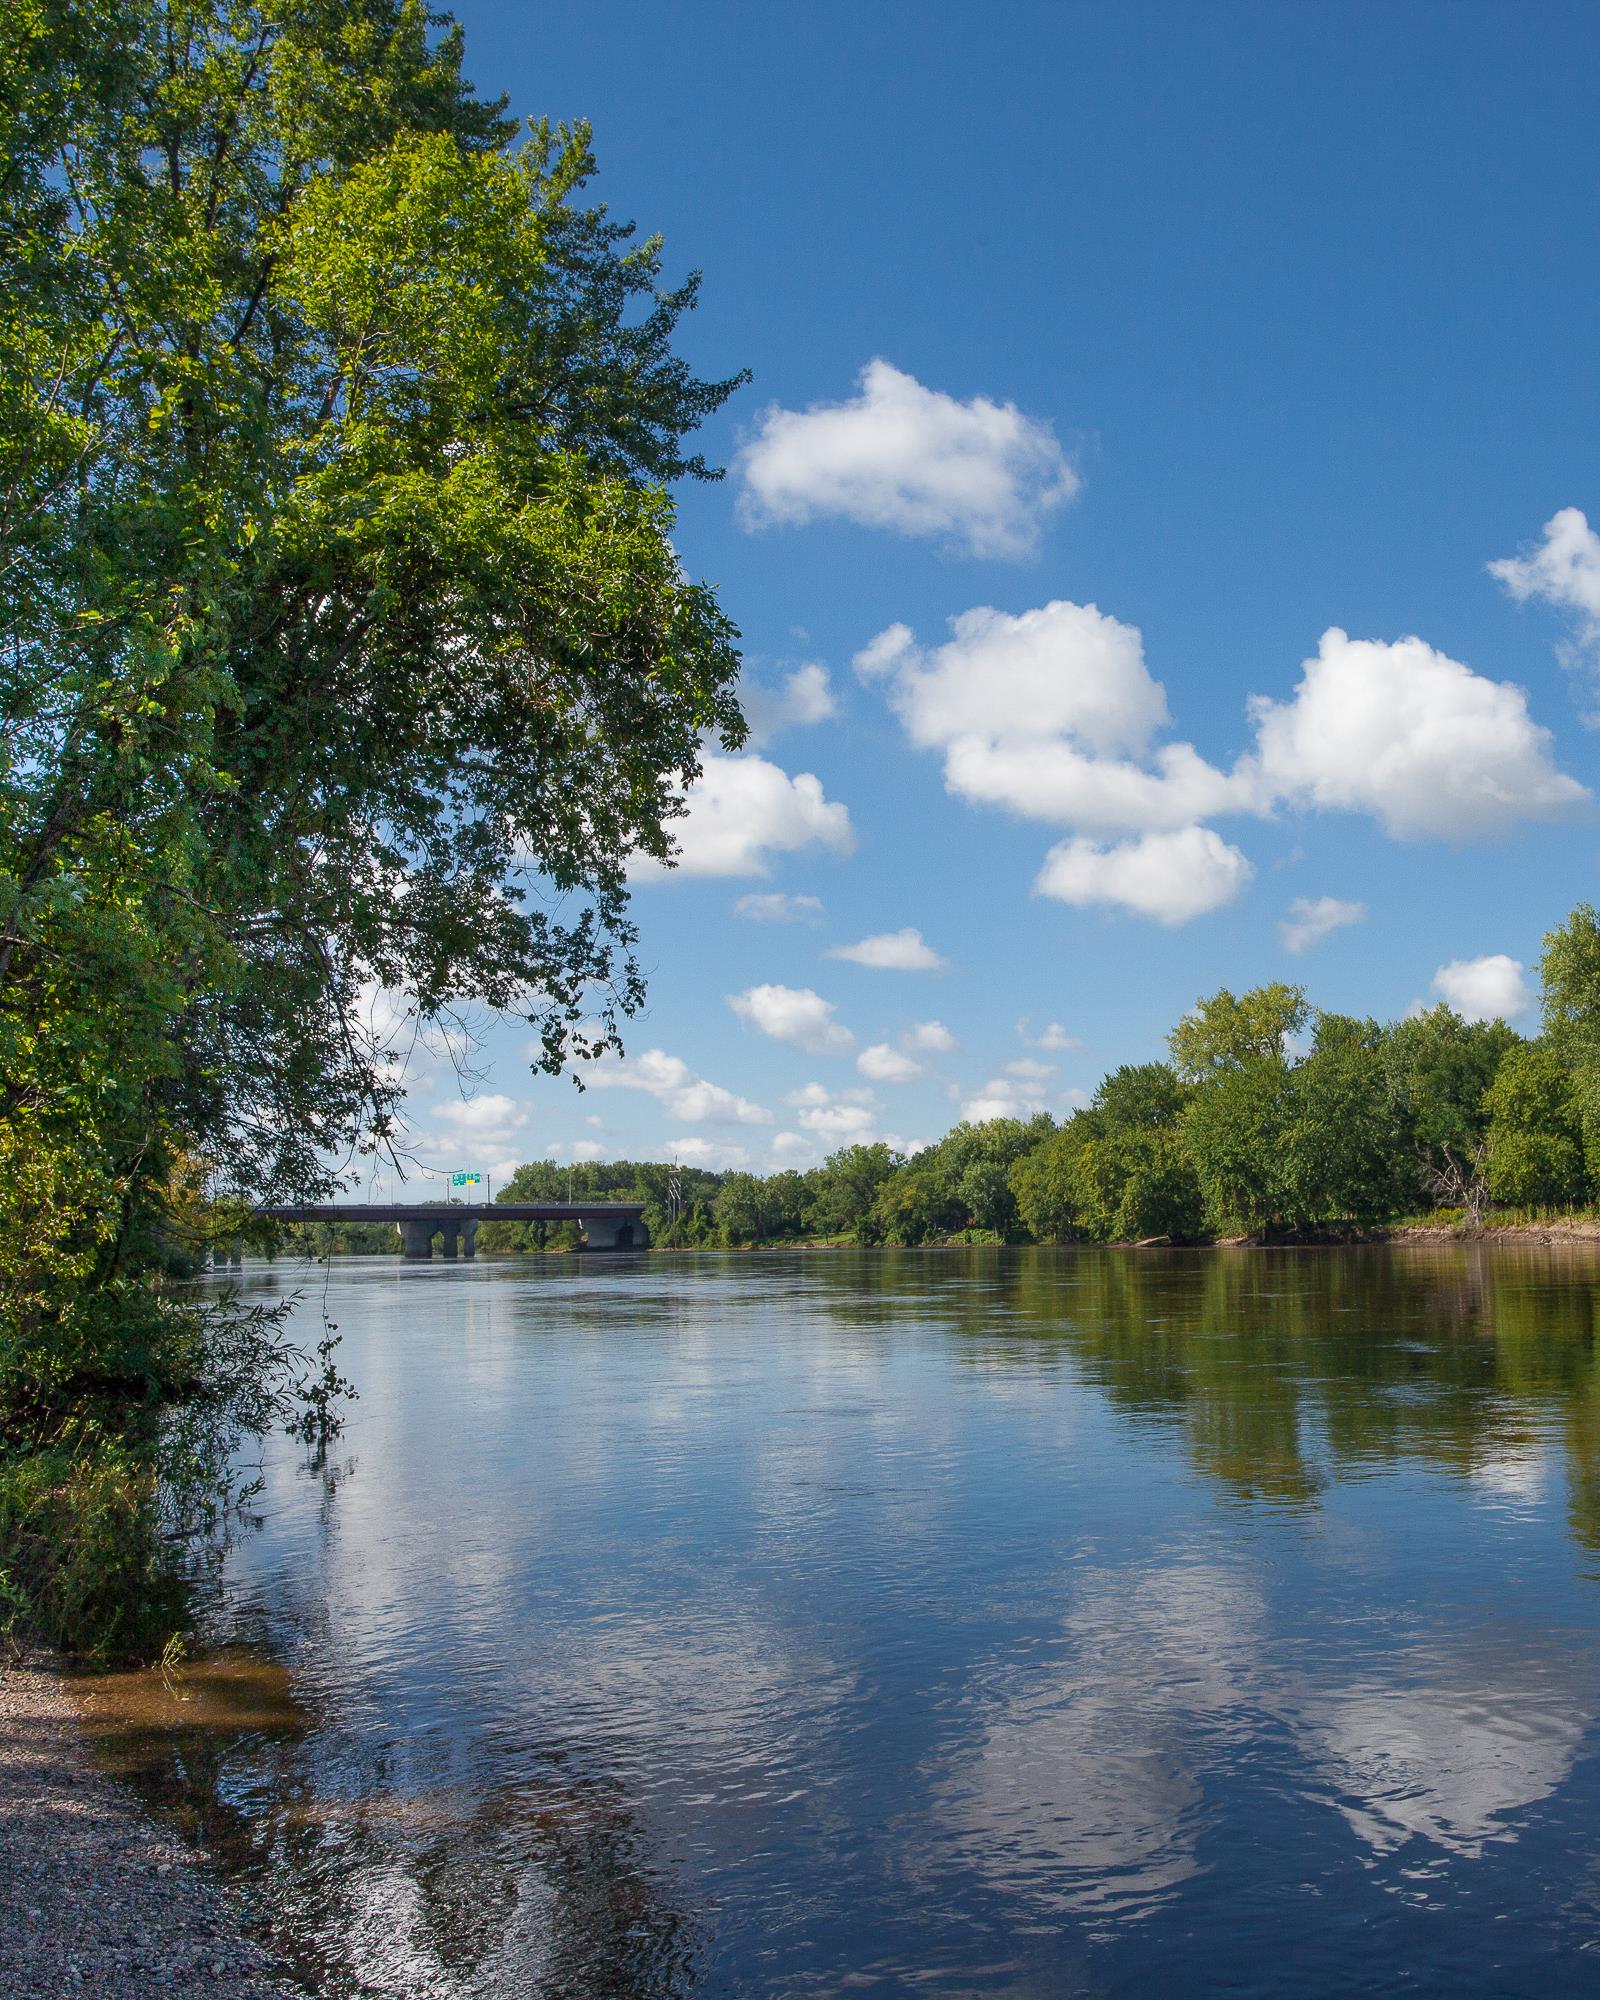 Upper Mississippi River above Minneapolis - credit NPS